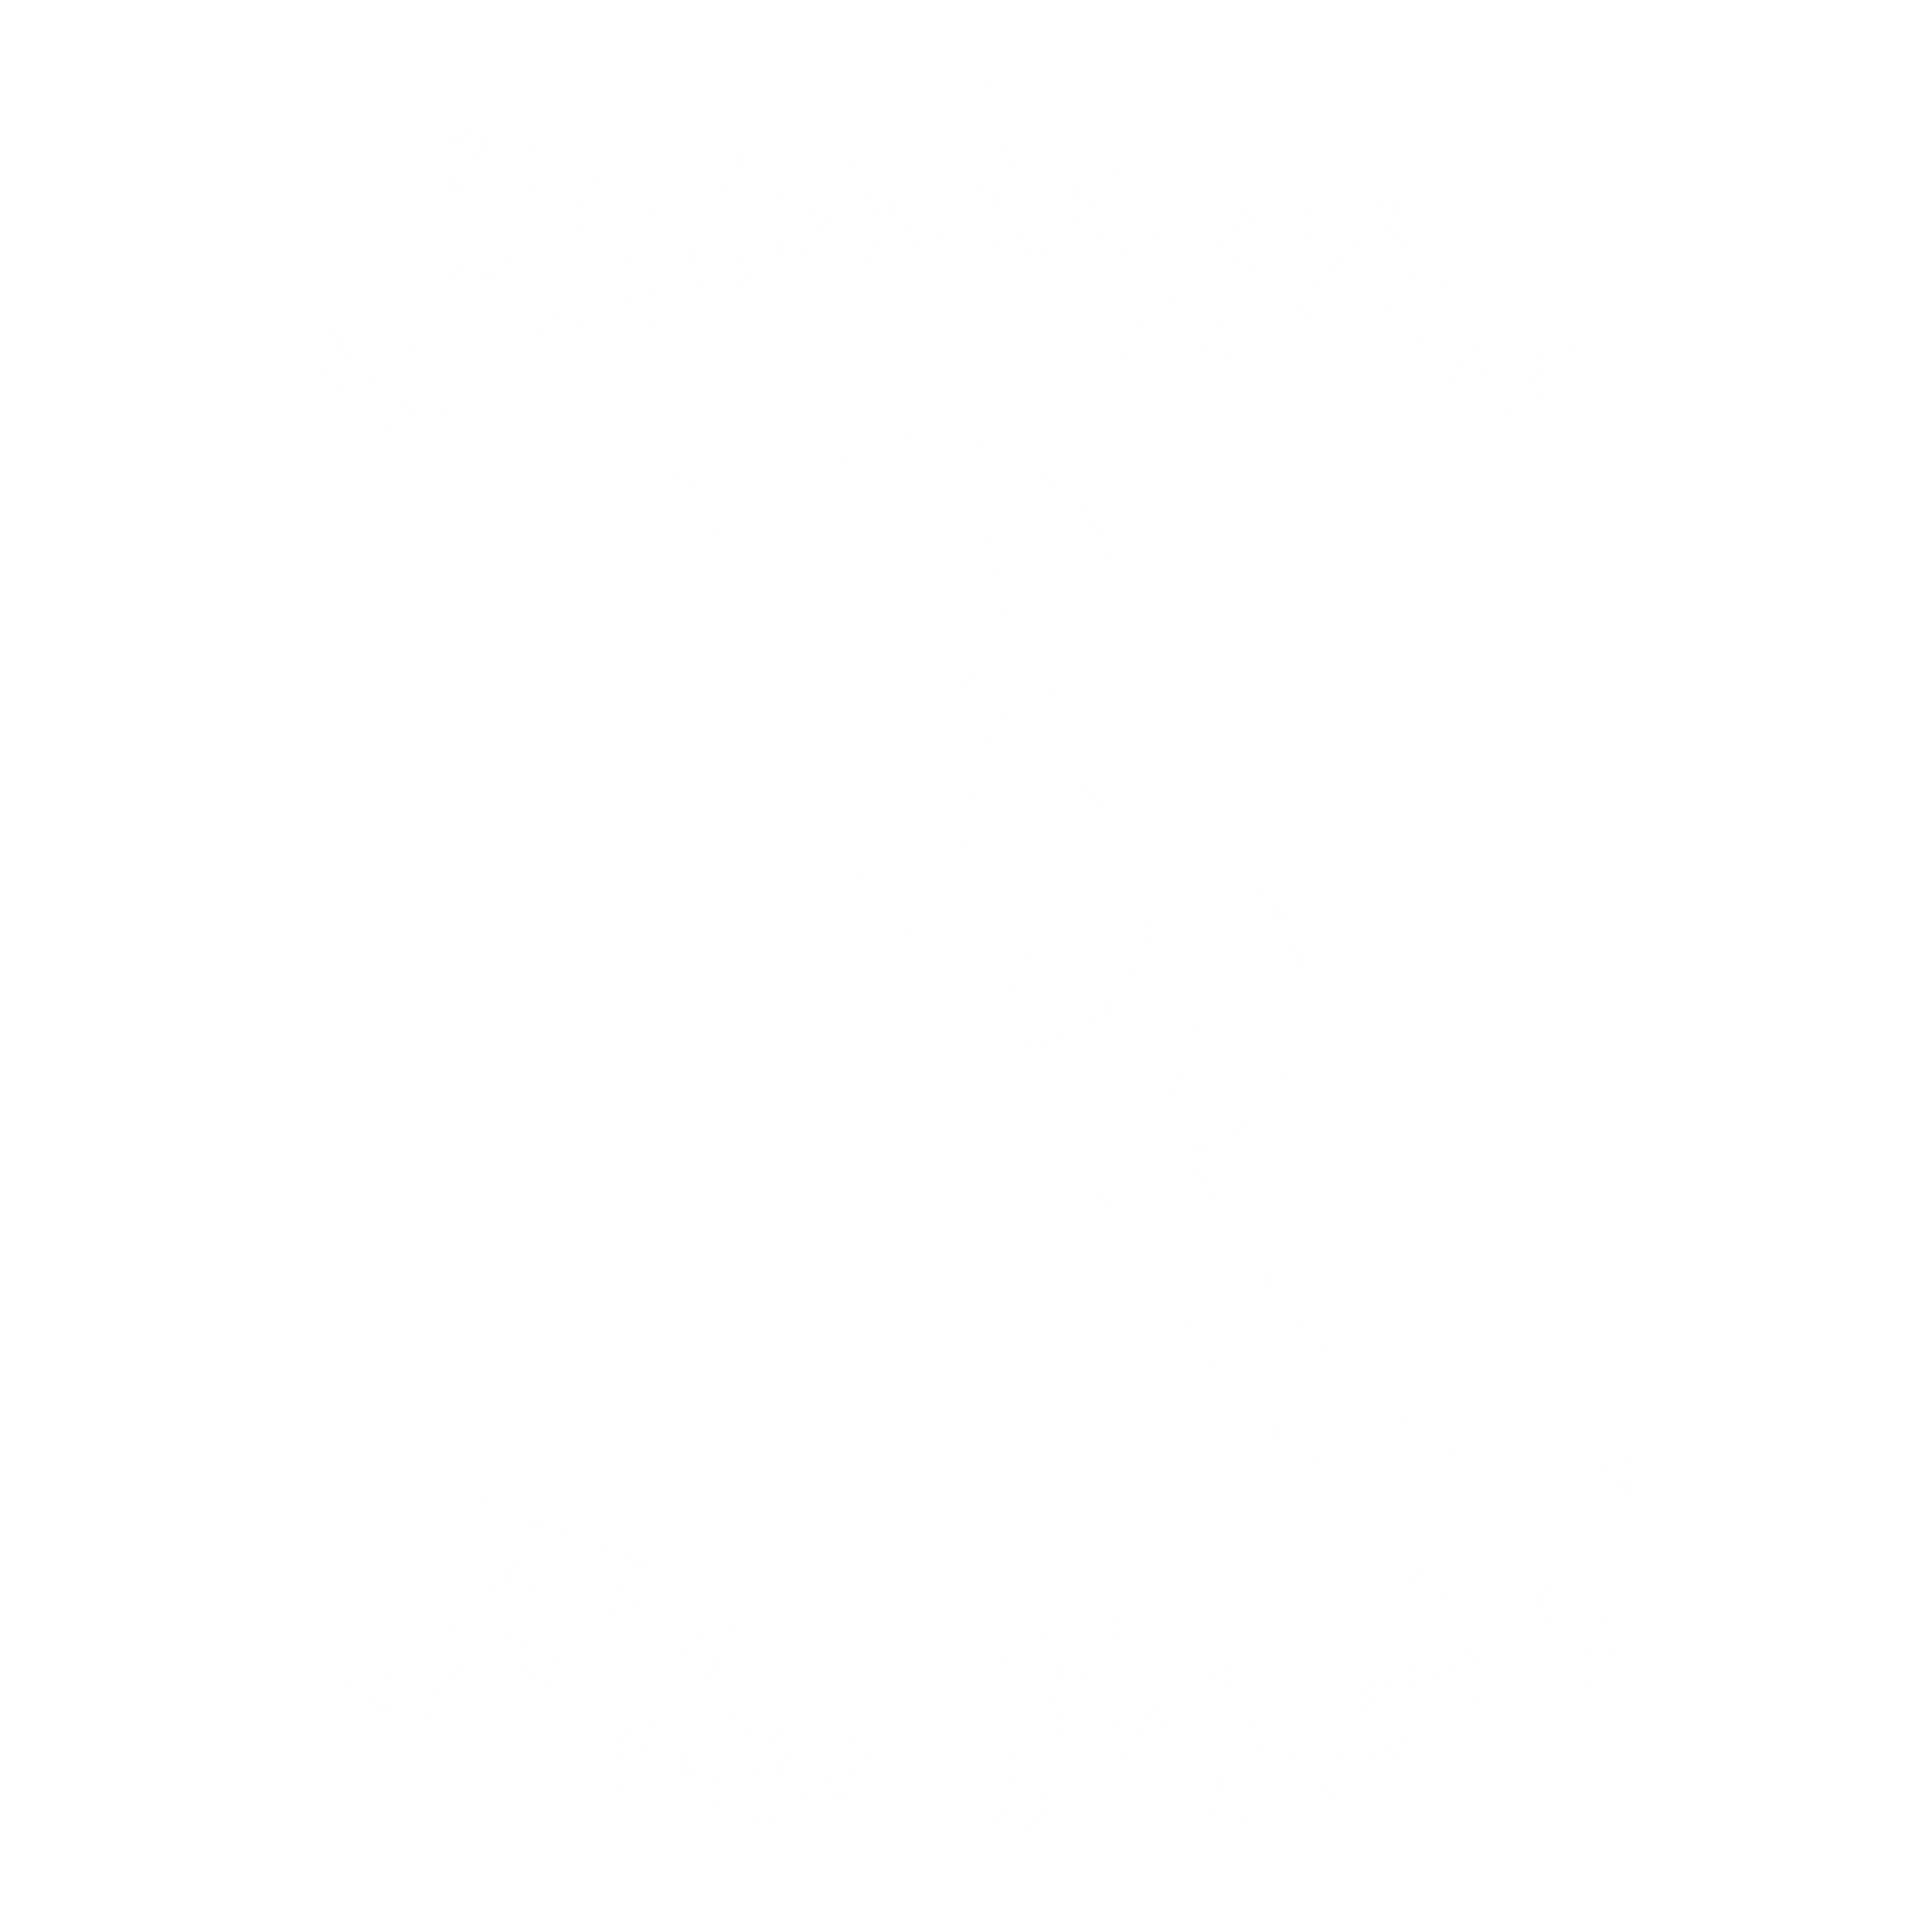 Wilmington Blue Rocks PNG HD Quality